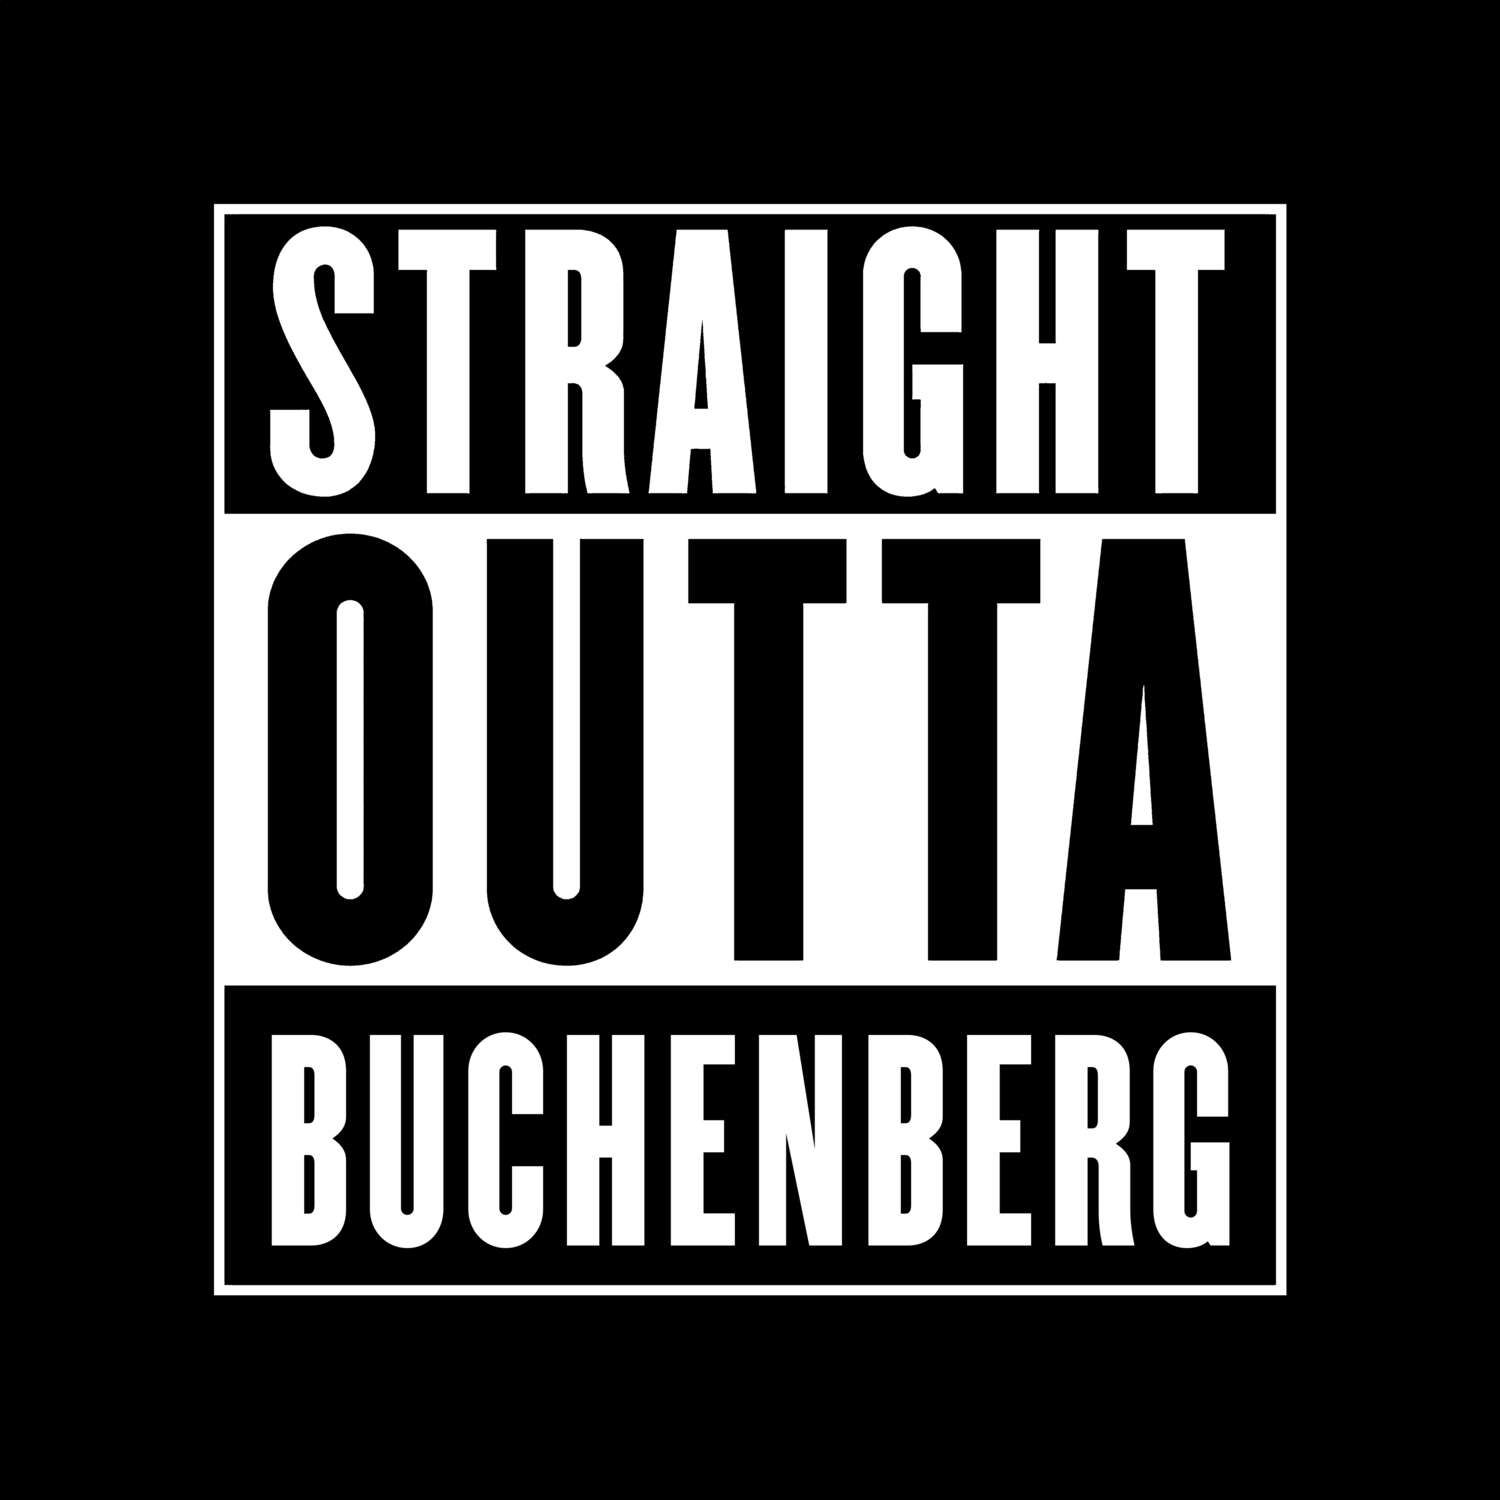 Buchenberg T-Shirt »Straight Outta«